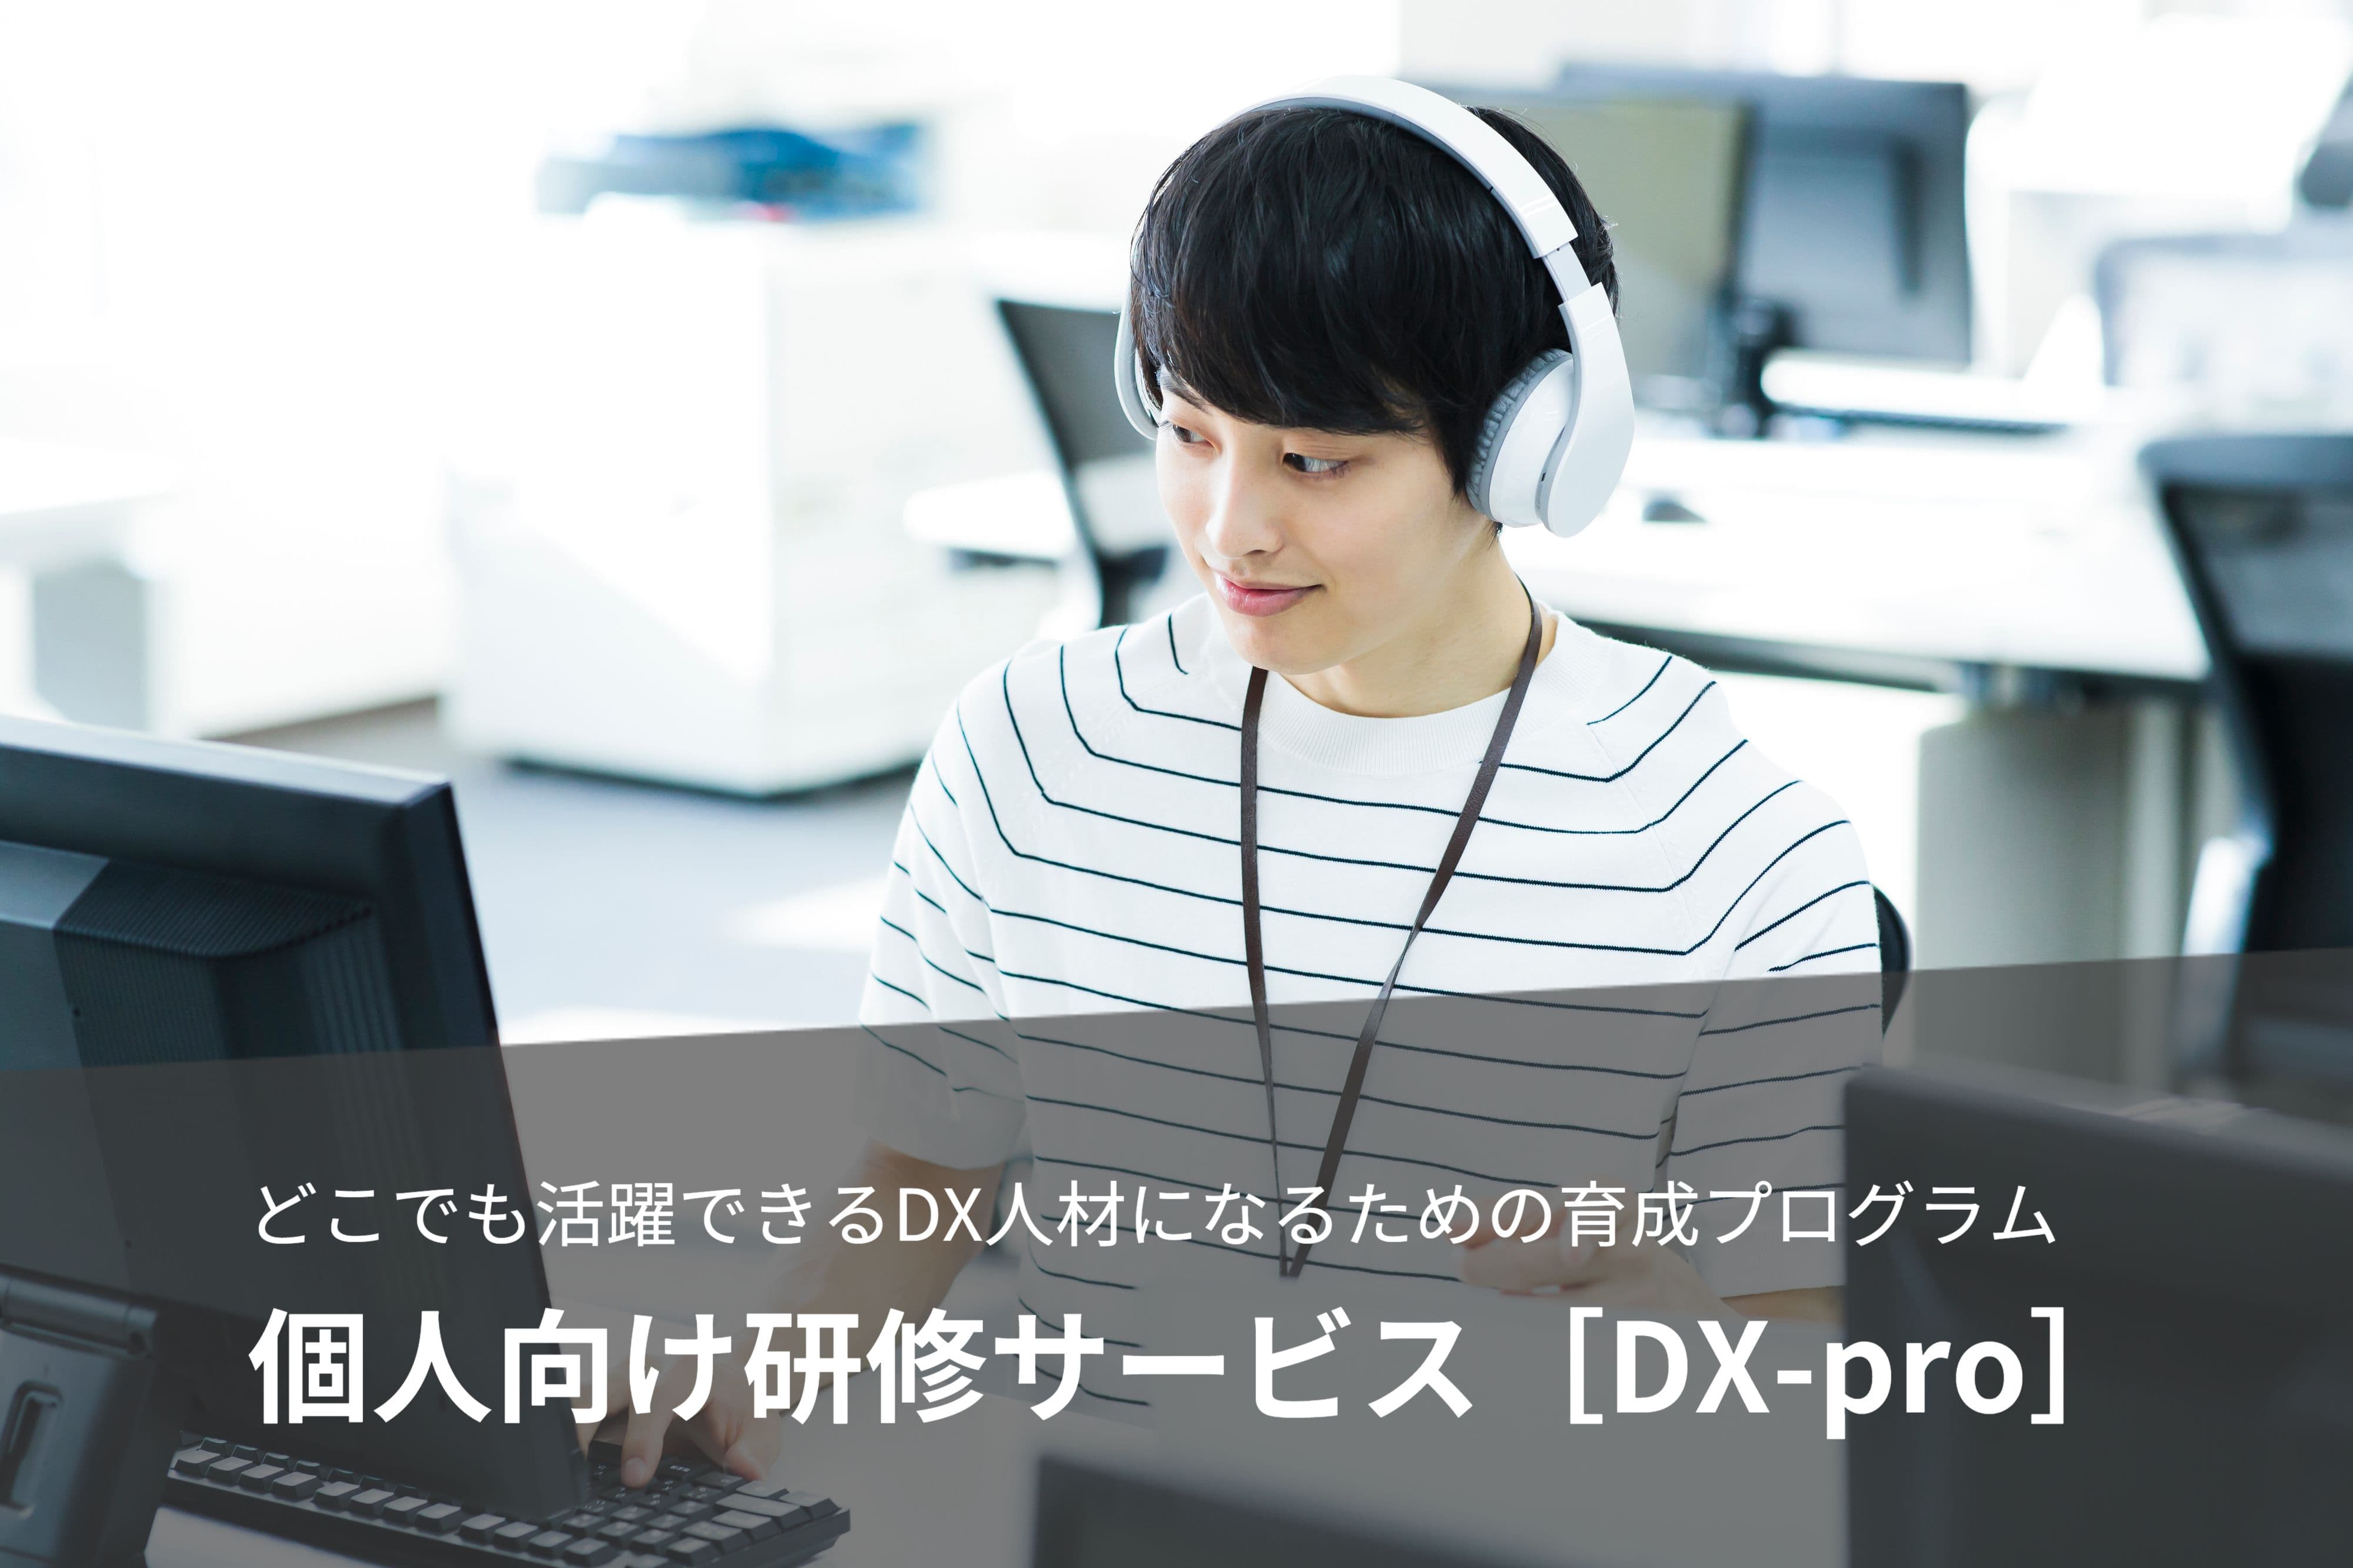 DX-pro人材トップ